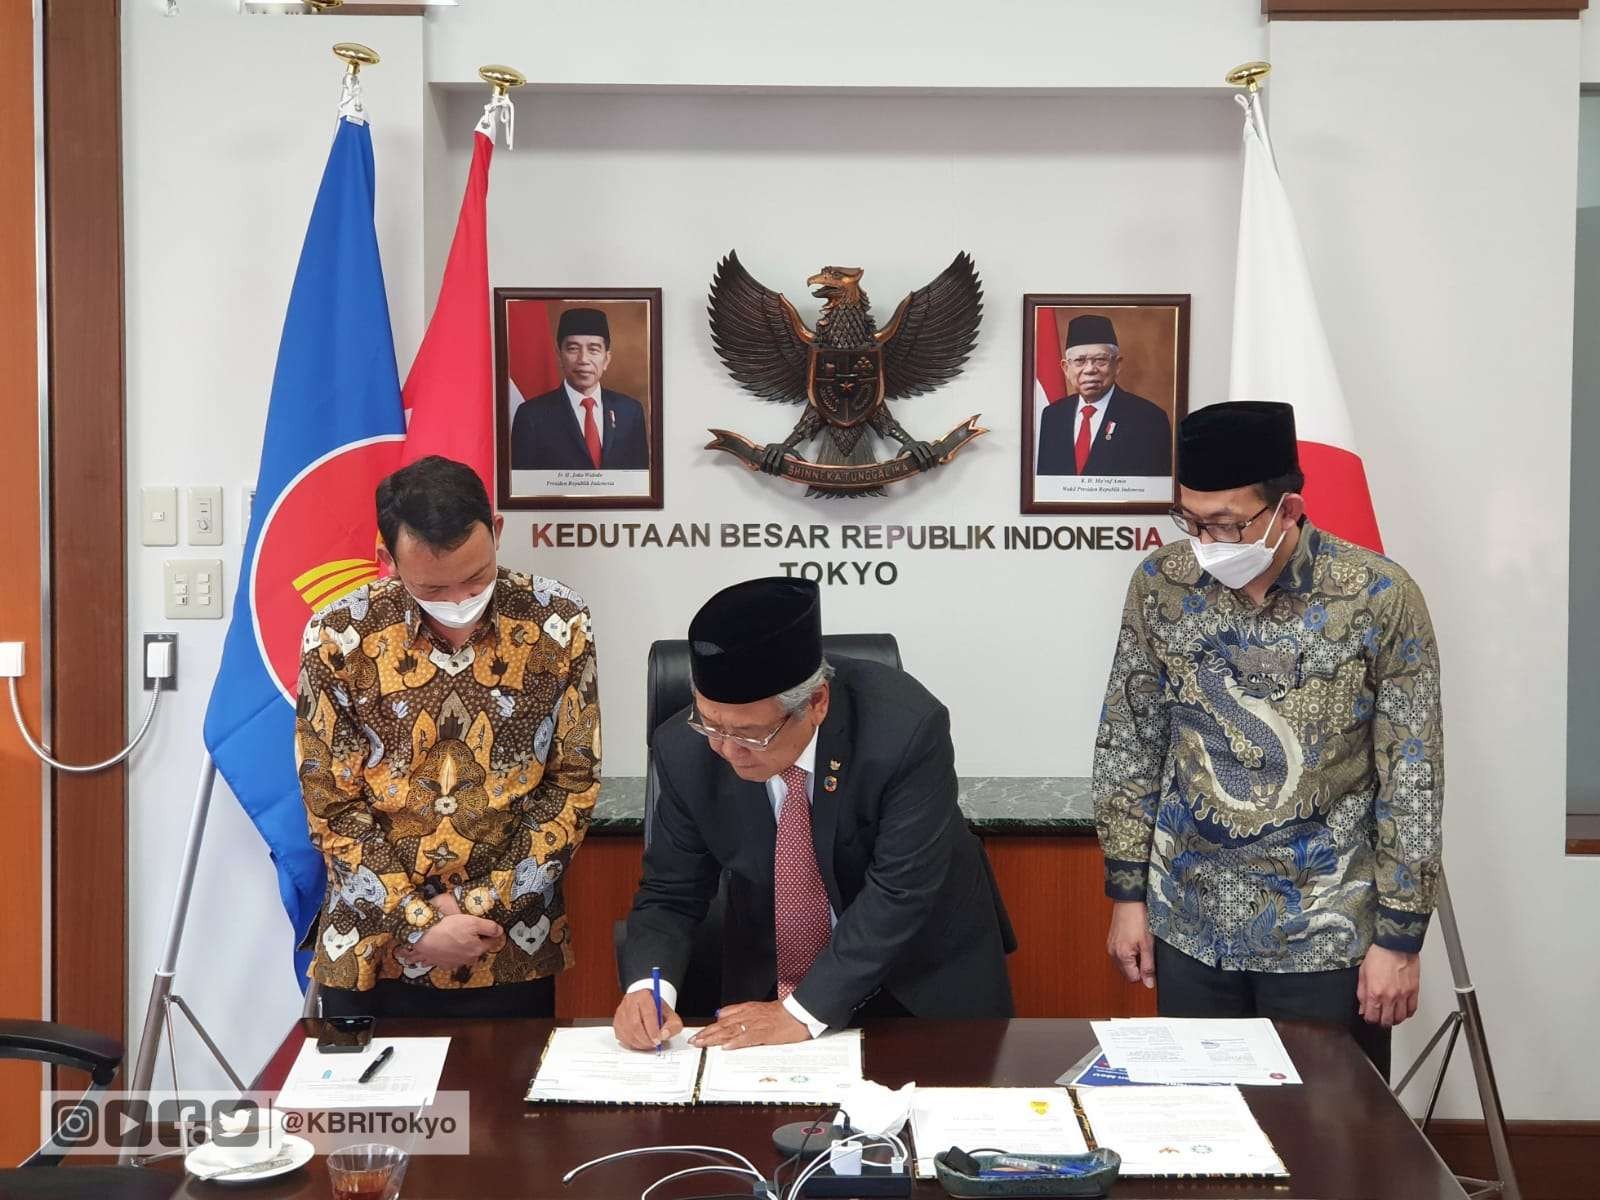 Kedutaan Besar Republik Indonesia (KBRI) Tokyo dan Pimpinan Pusat (PP) Muhammadiyah melakukan penandatanganan nota kesepahaman (MoU) tentang pengembangan kerja sama pendidikan pada Jumat, 1 April 2022. (Foto: Istimewa)